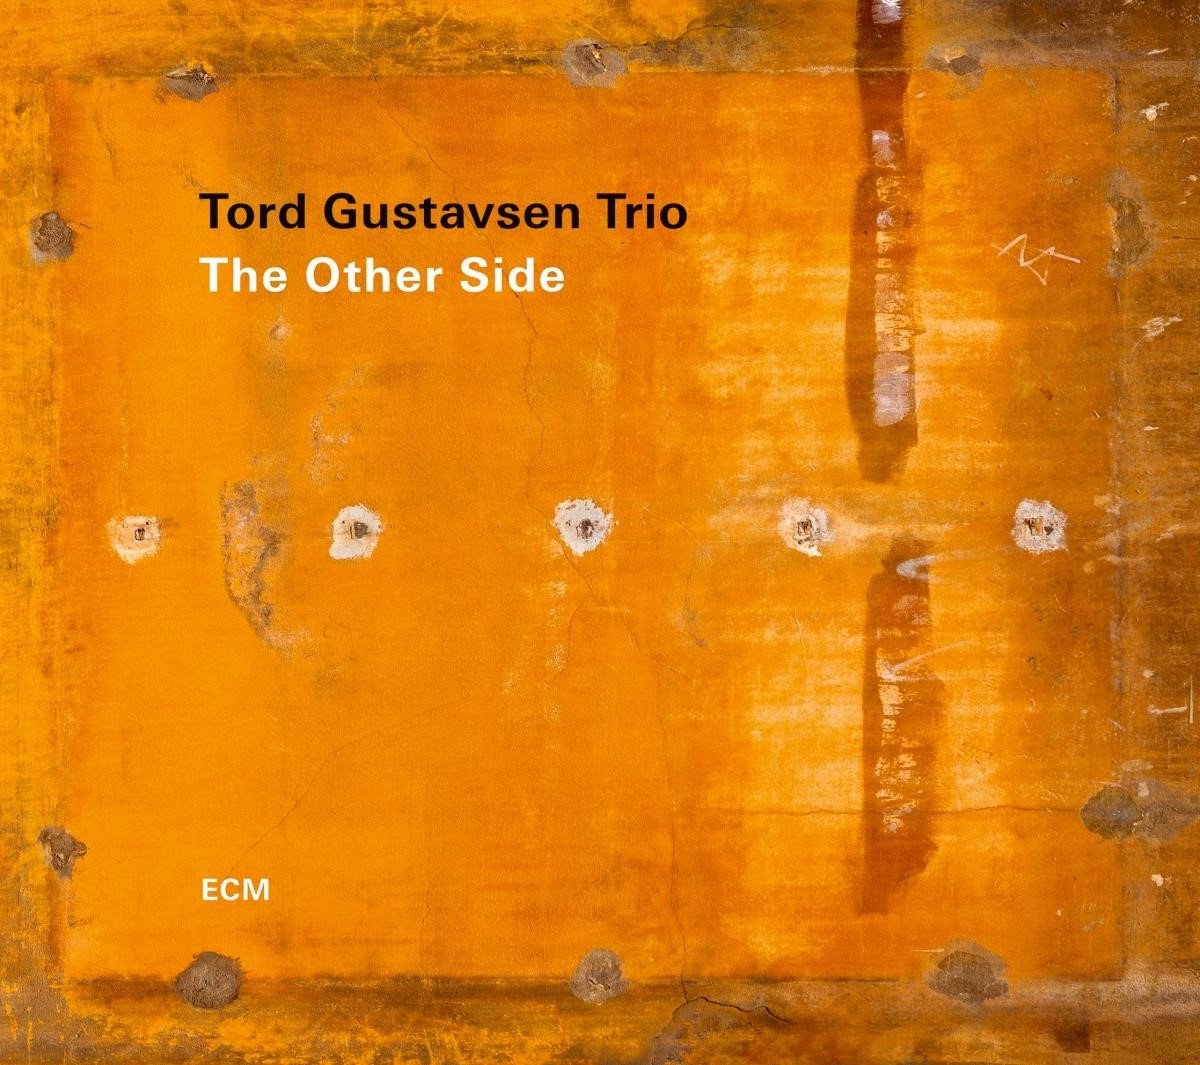 Tord Gustavsen Trio - The Other Side (LP) - Tord Gustavsen Trio